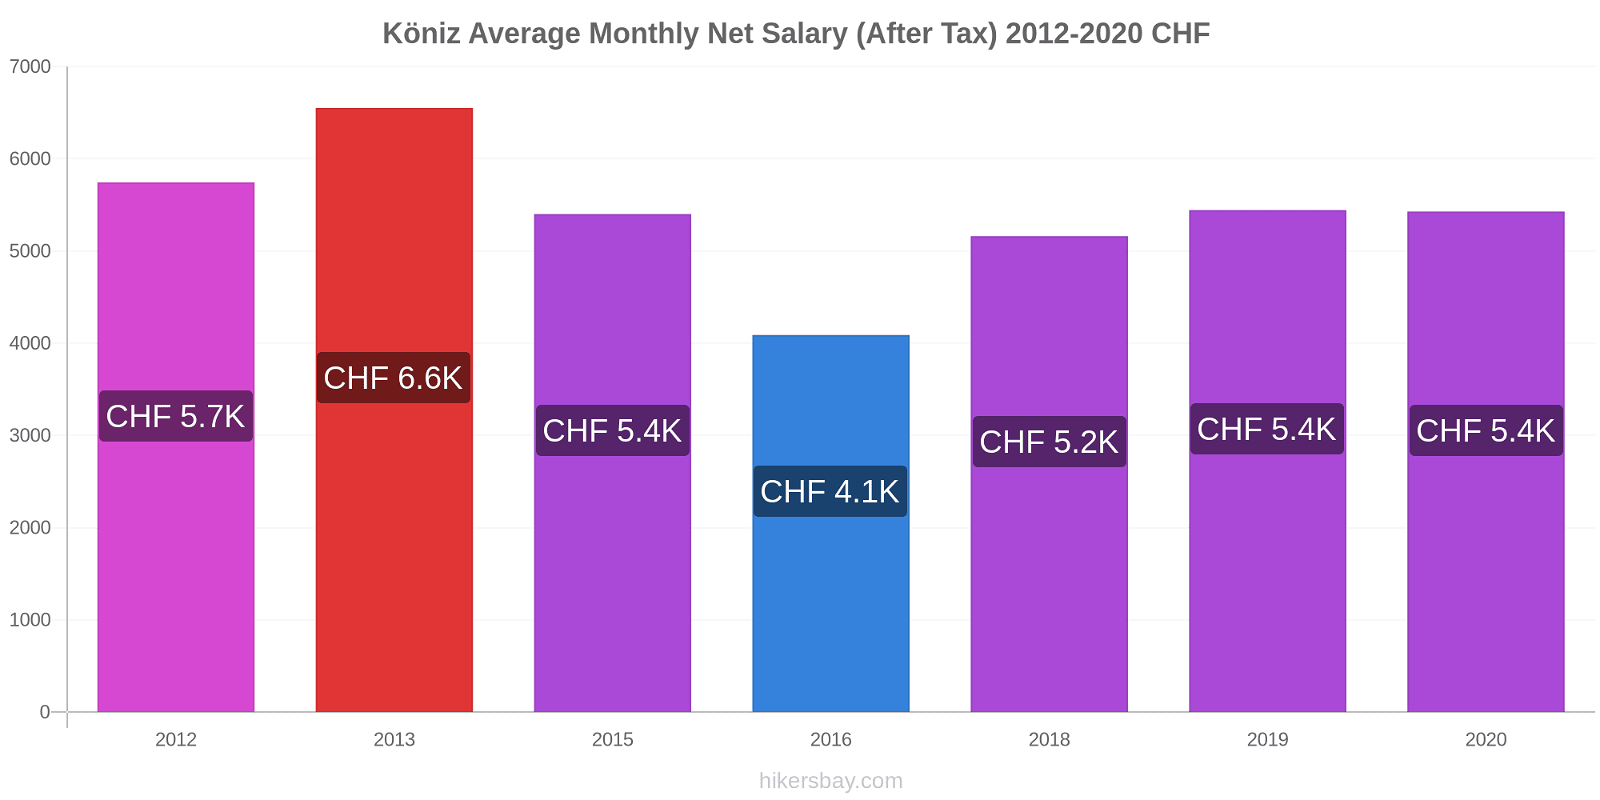 Köniz price changes Average Monthly Net Salary (After Tax) hikersbay.com